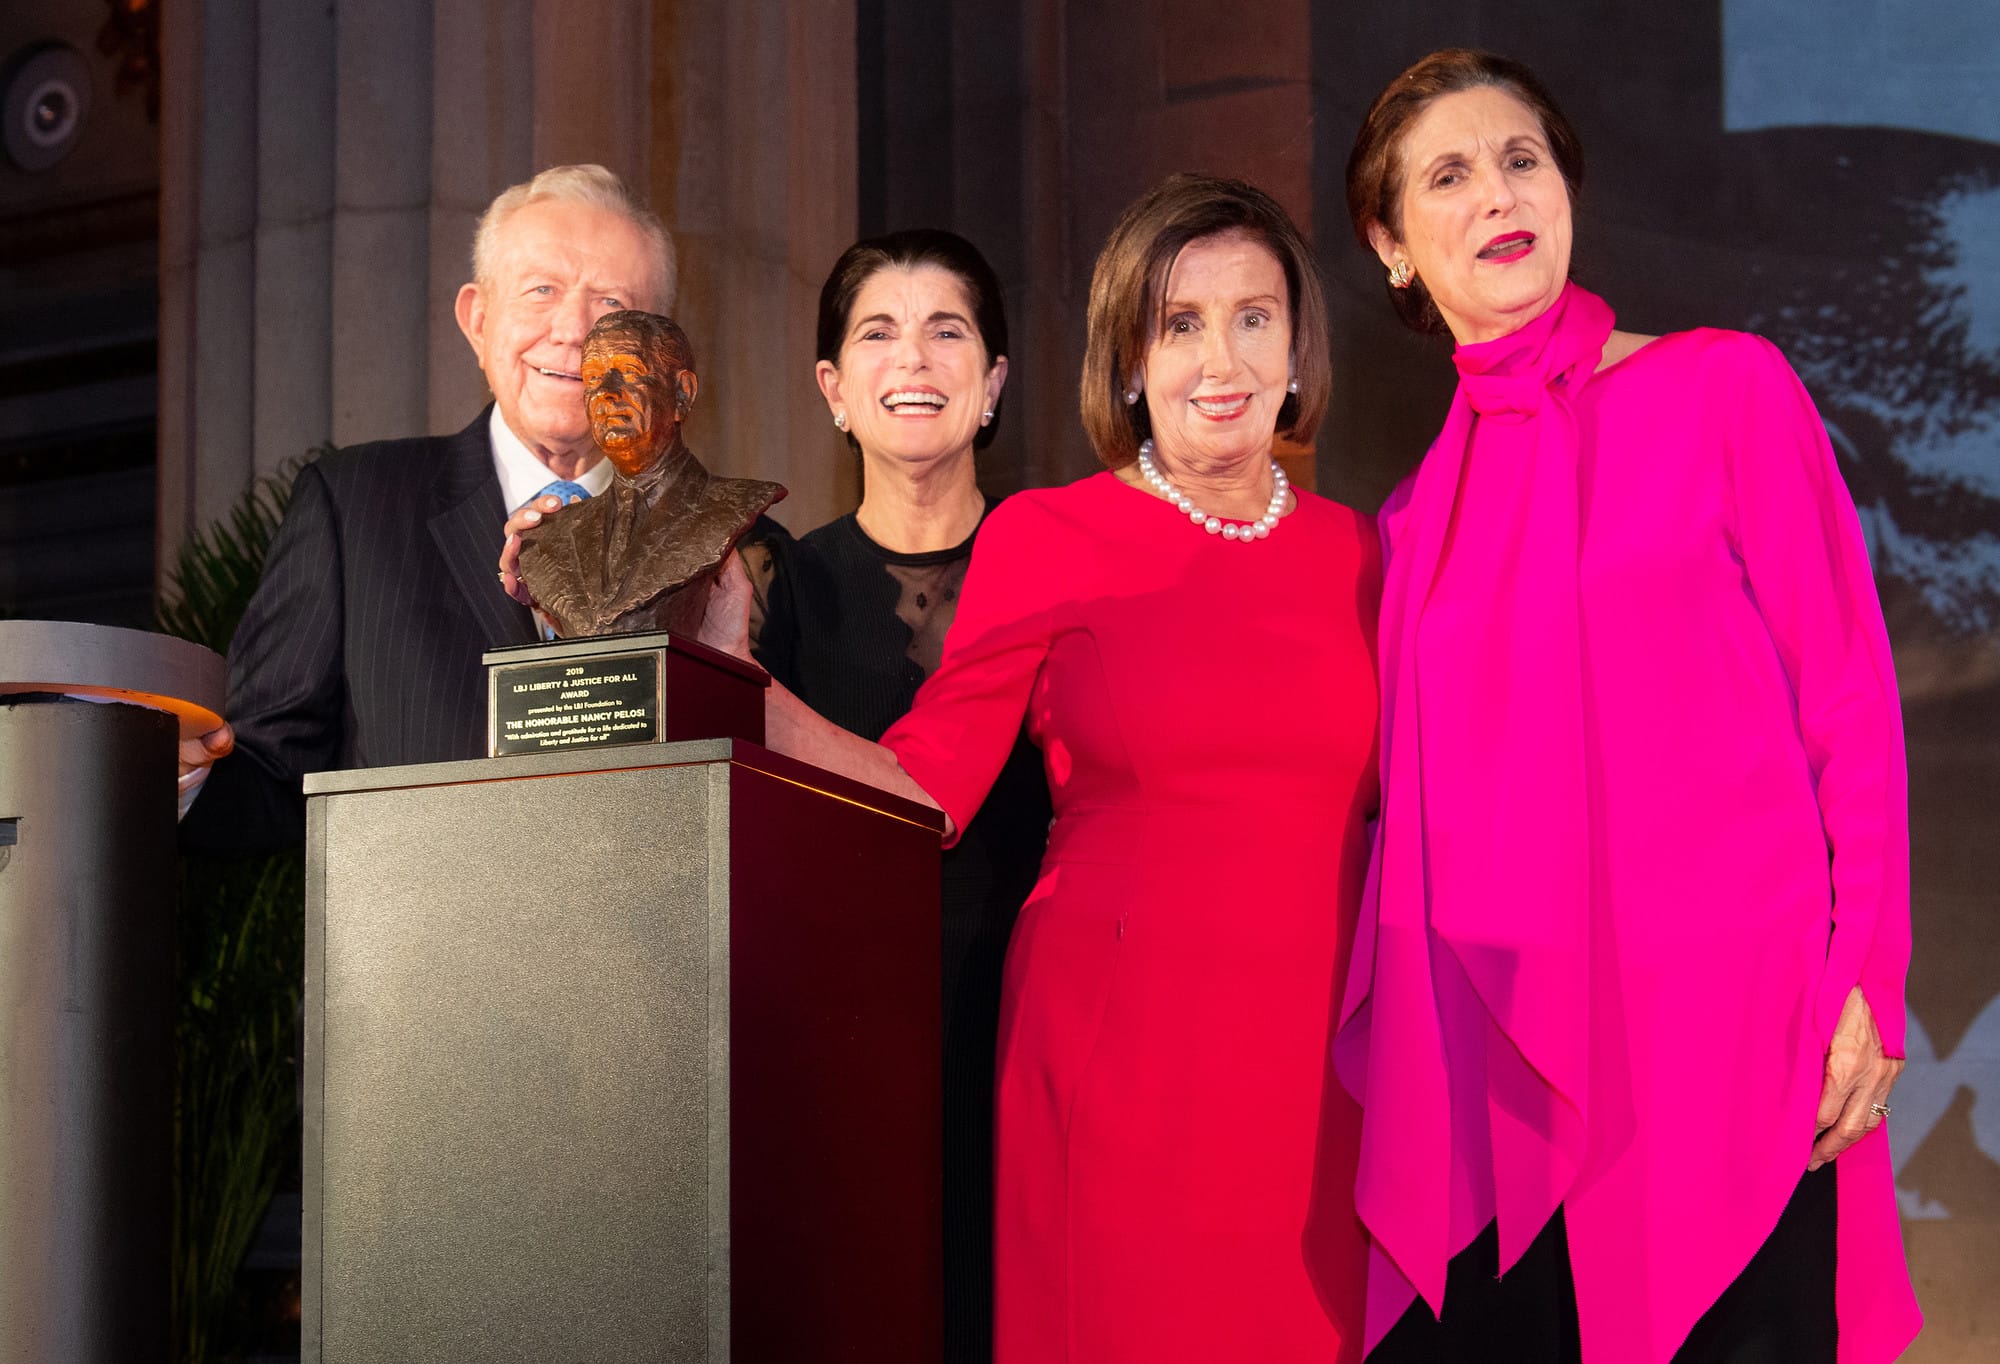 L-R: Ben Barnes, Luci Baines Johnson, Speaker Nancy Pelosi, and Lynda Johnson Robb. LBJ Foundation photo by Daniel Swartz, 2019.